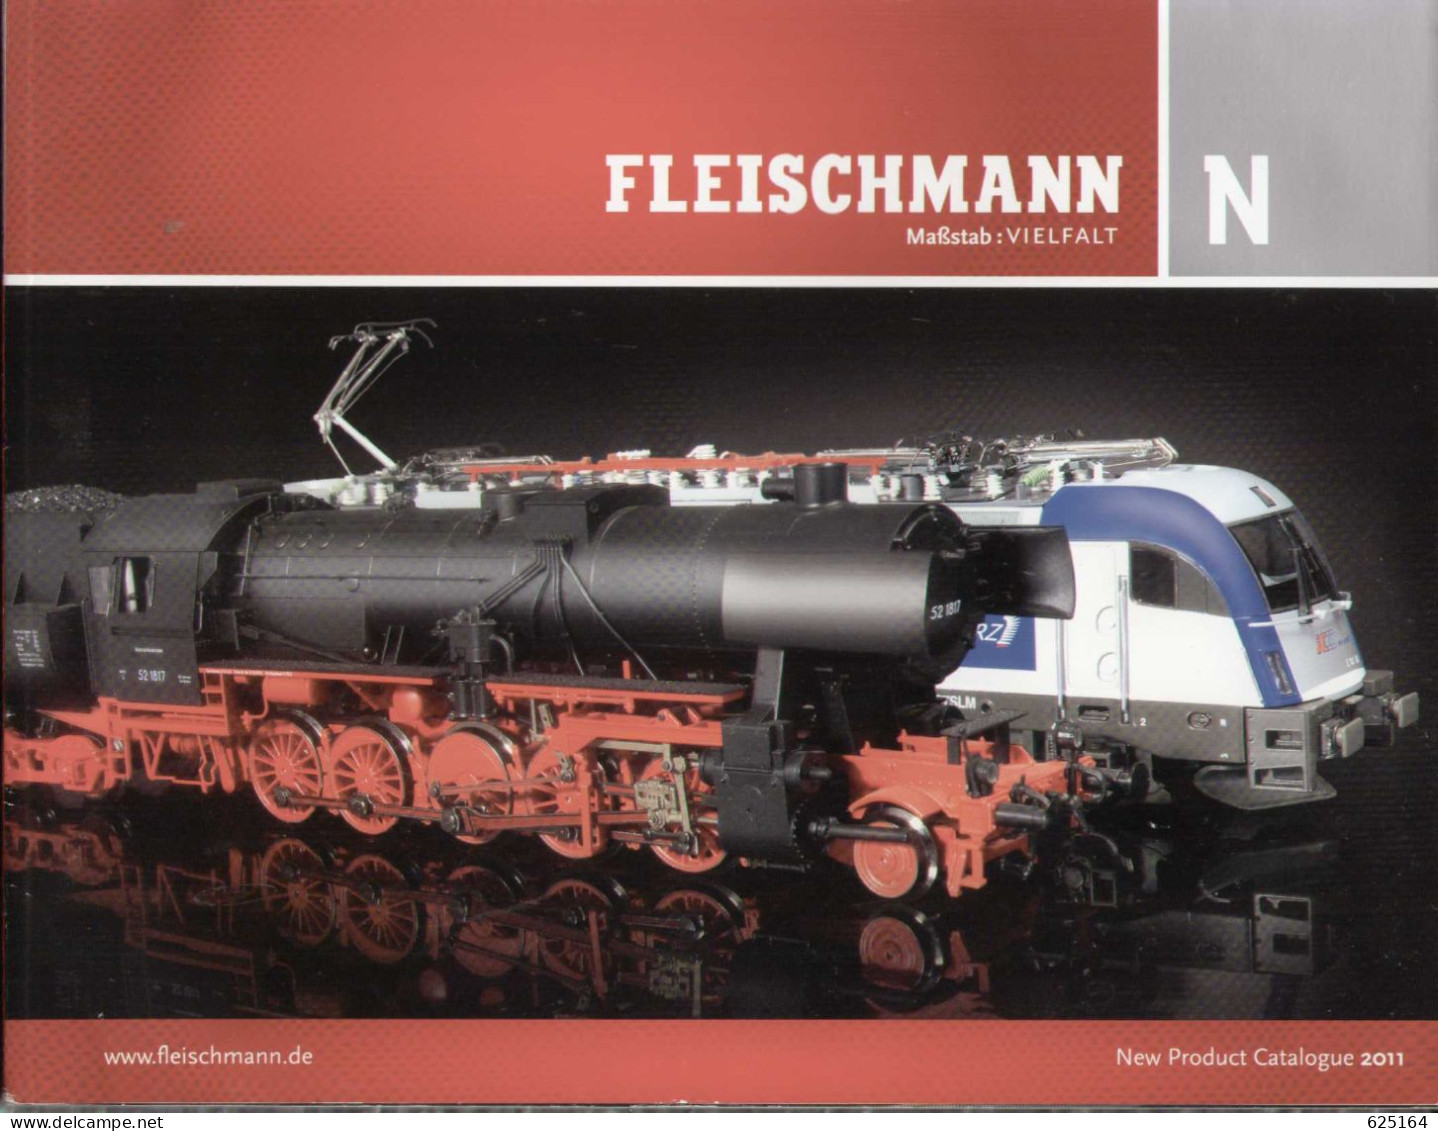 Catalogue FLEISCHMANN 2011 N Maßstab VIELFALT New Product - German